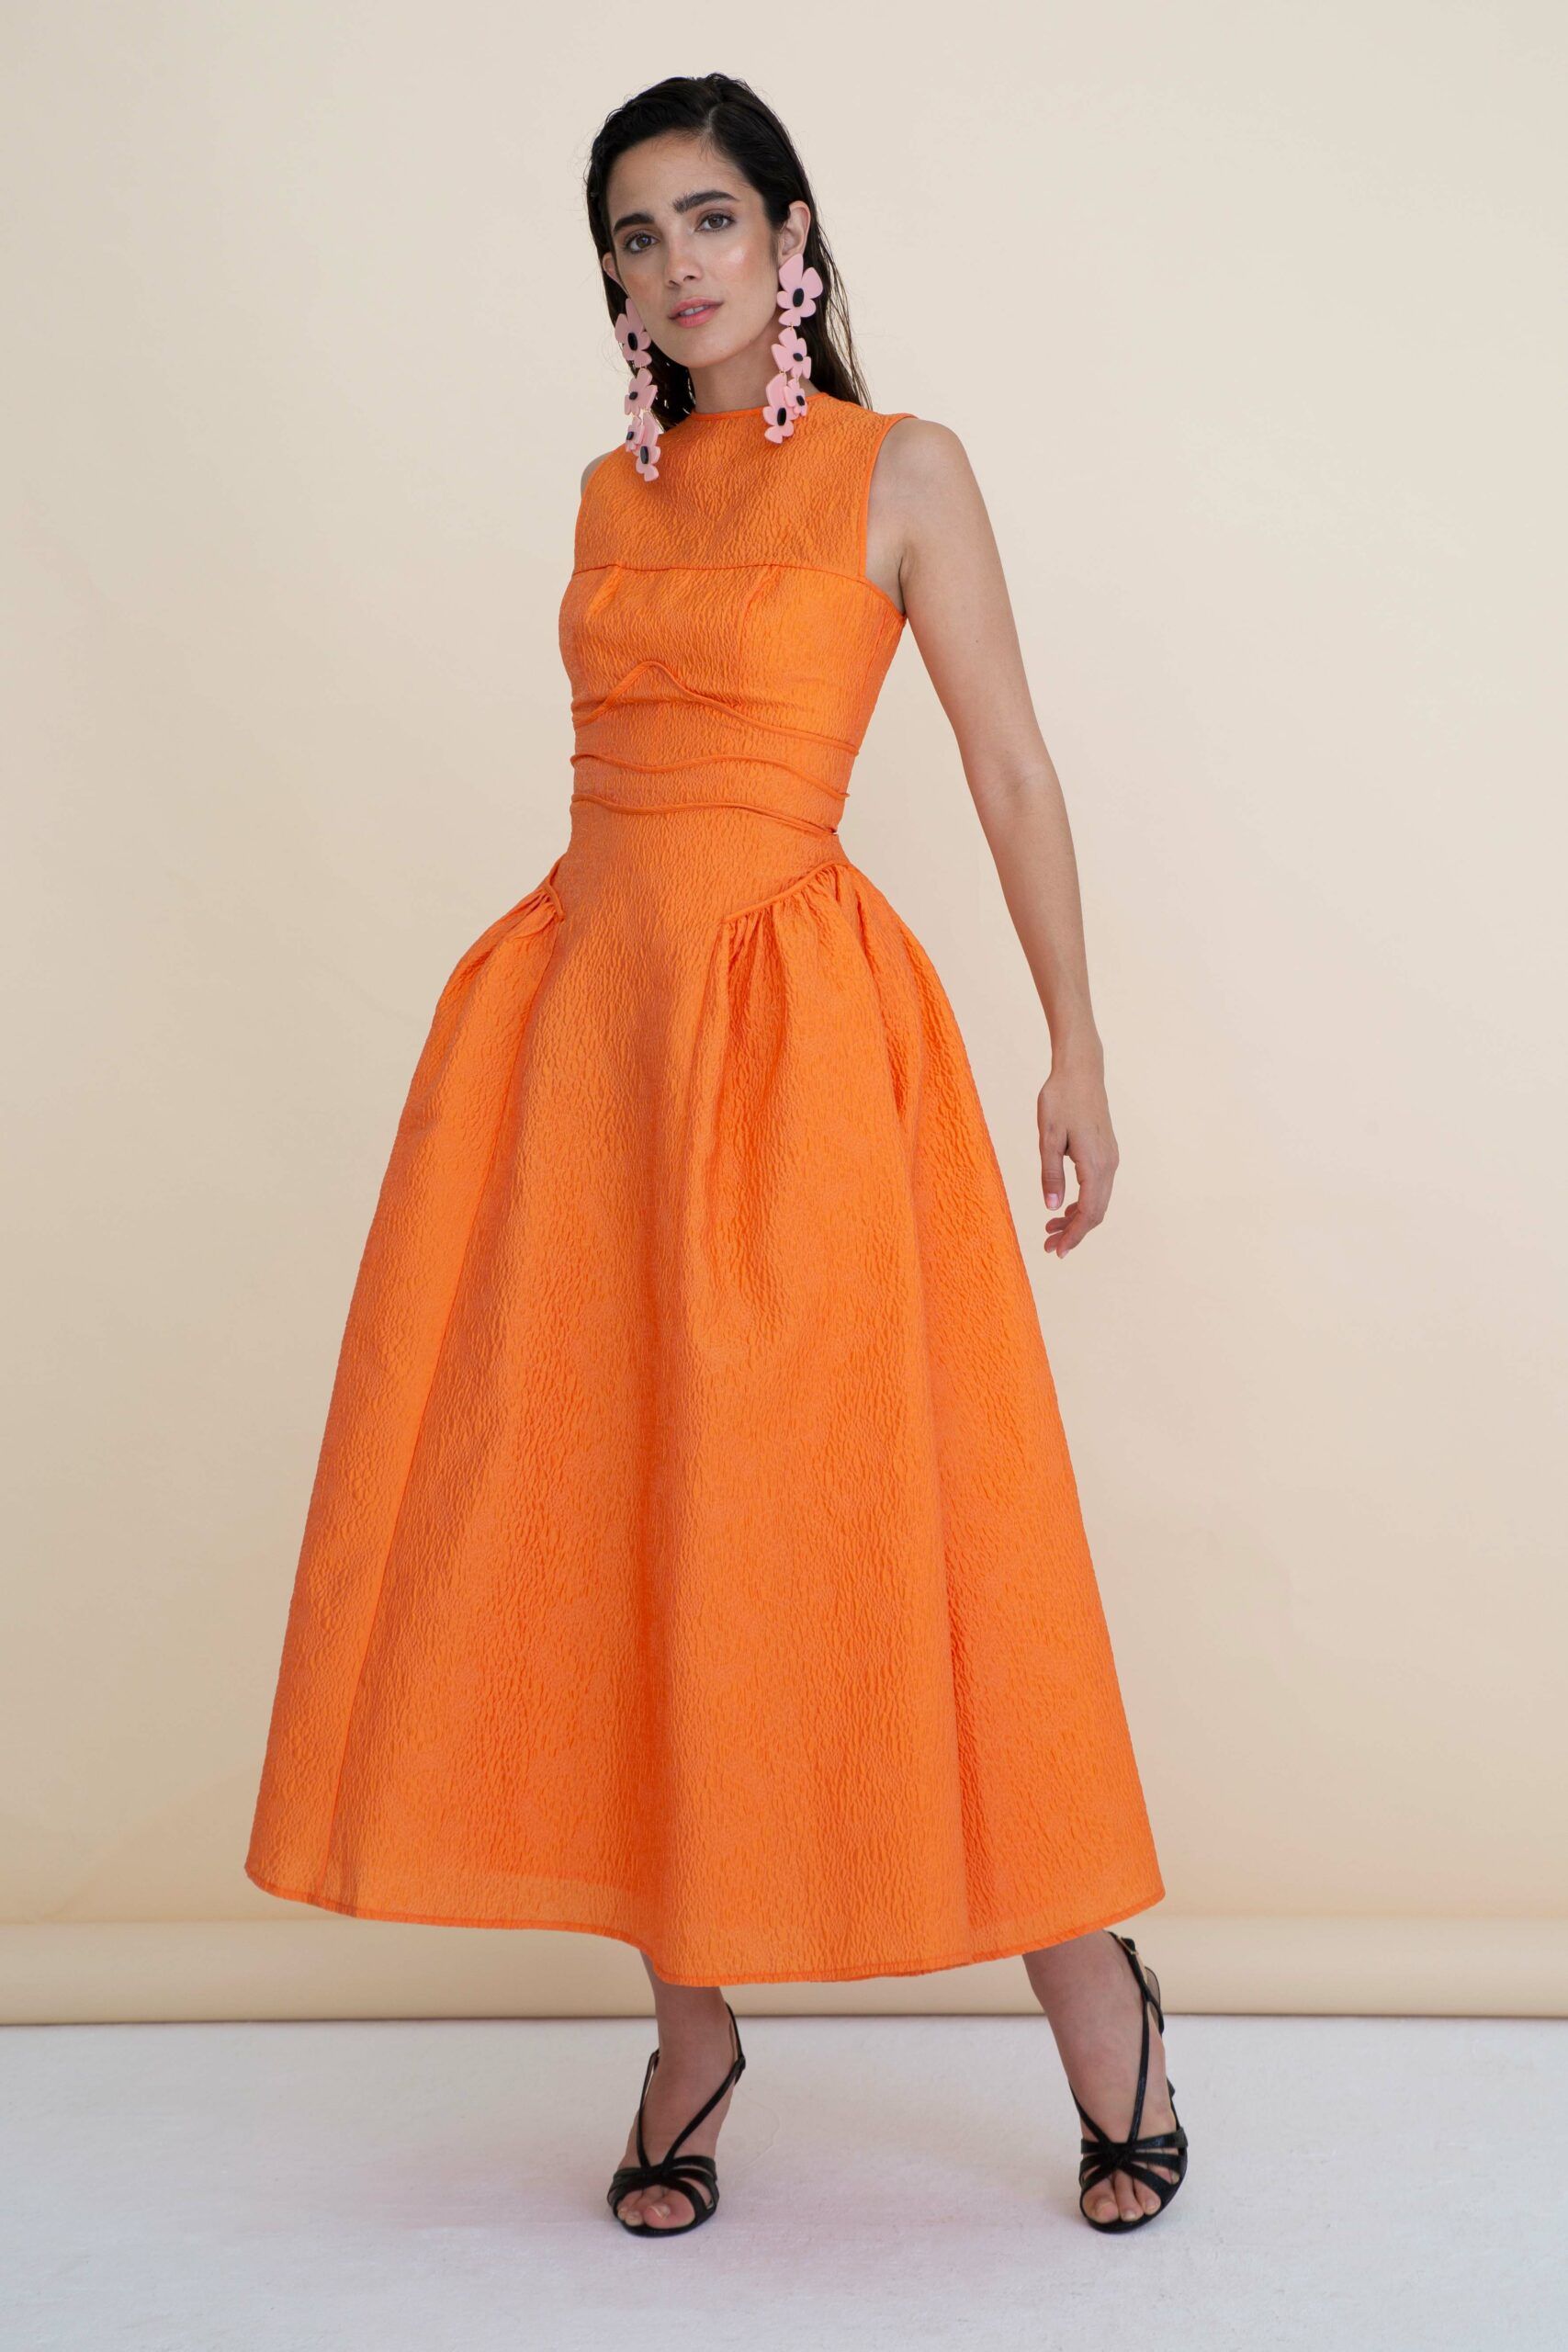 sophia-vestido-midi-naranja-corset-rachel.gilbert